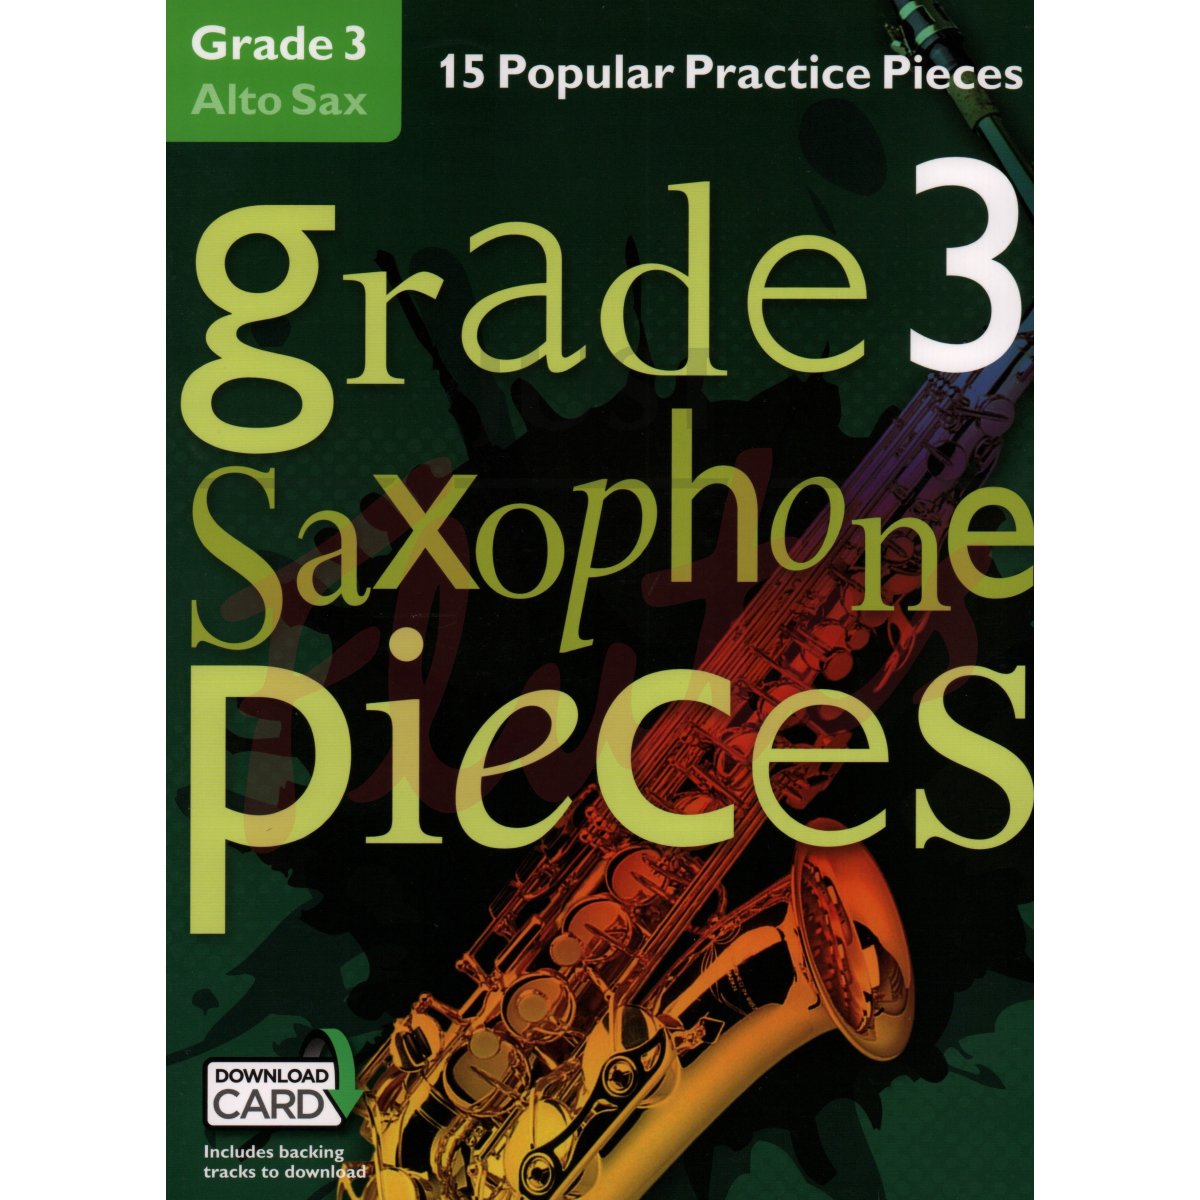 Grade 3 Saxophone Pieces - 15 Popular Practice Pieces for Alto Saxophone